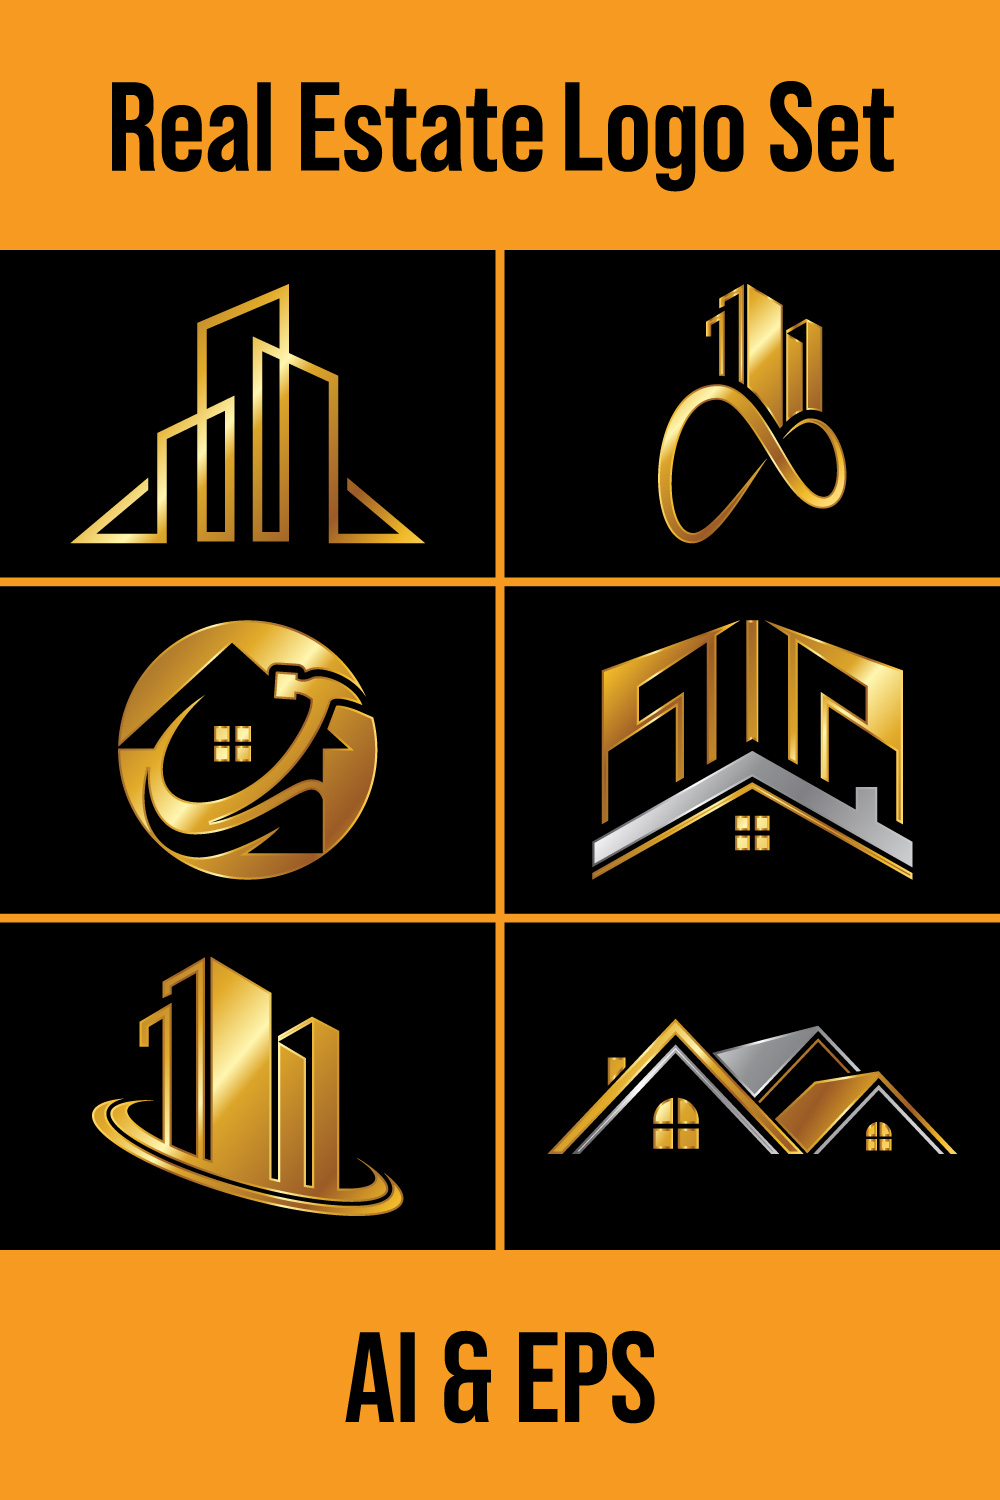 Real estate logo, House logo, Home logo sign symbol pinterest preview image.